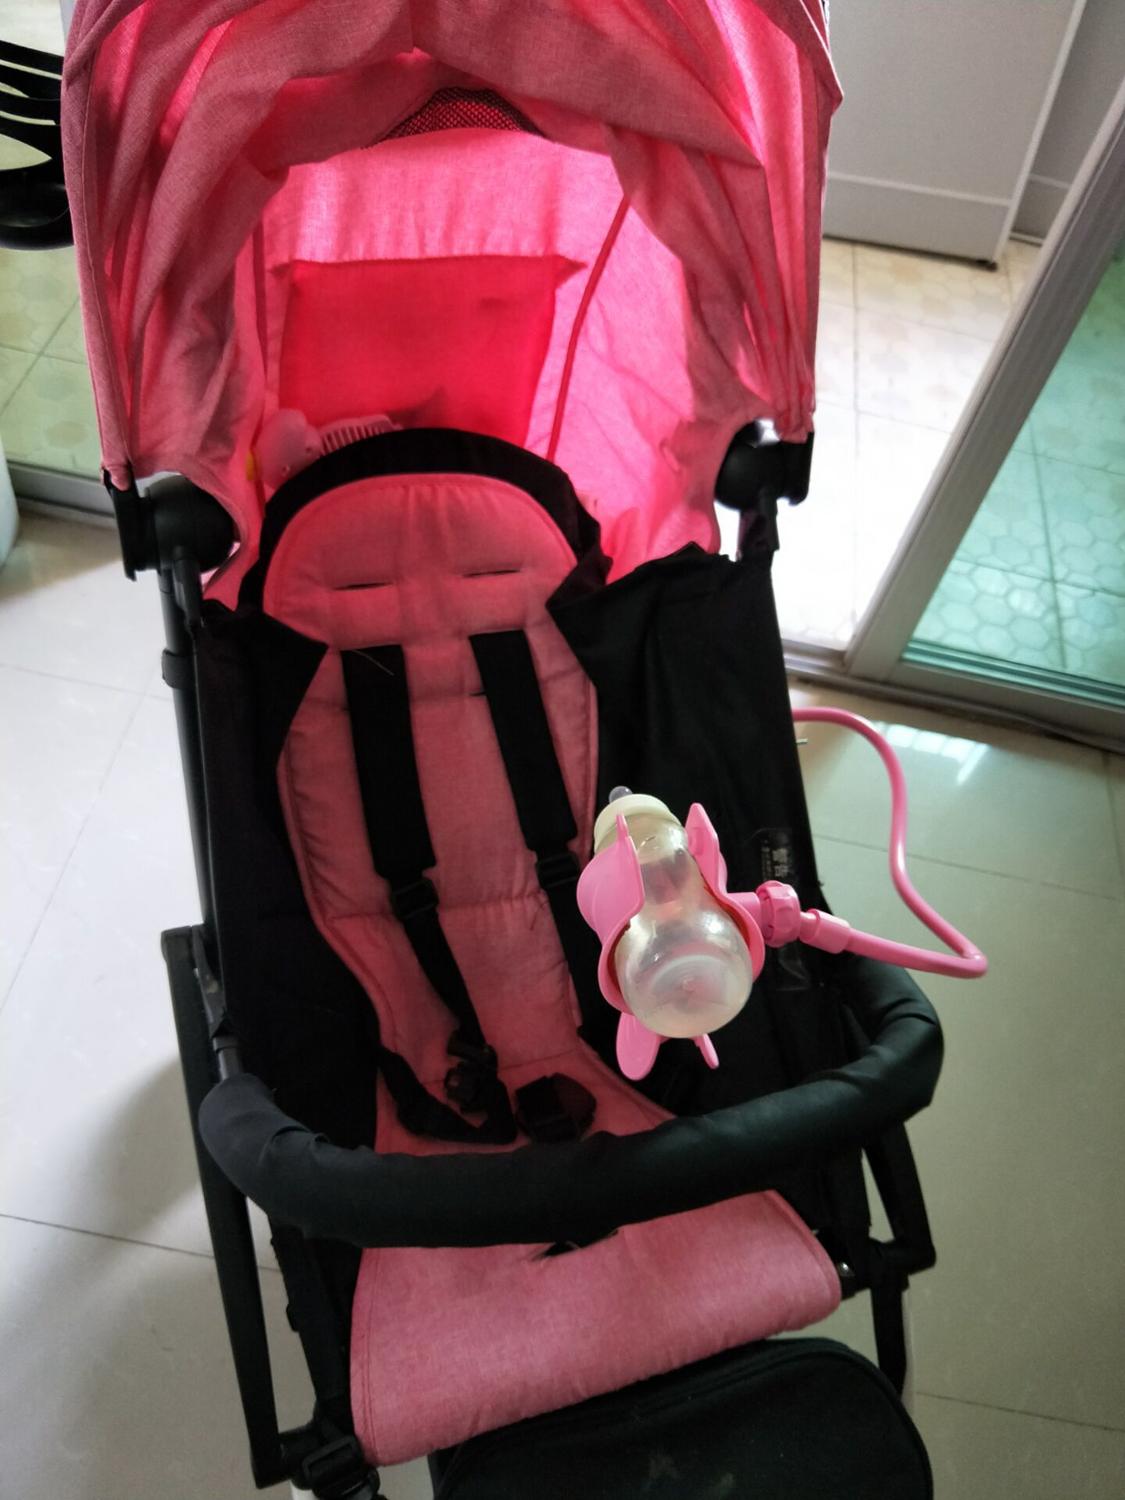 Baby Hands-Free Bottle Holder Cart Accessories - ROMART GLOBAL LTD